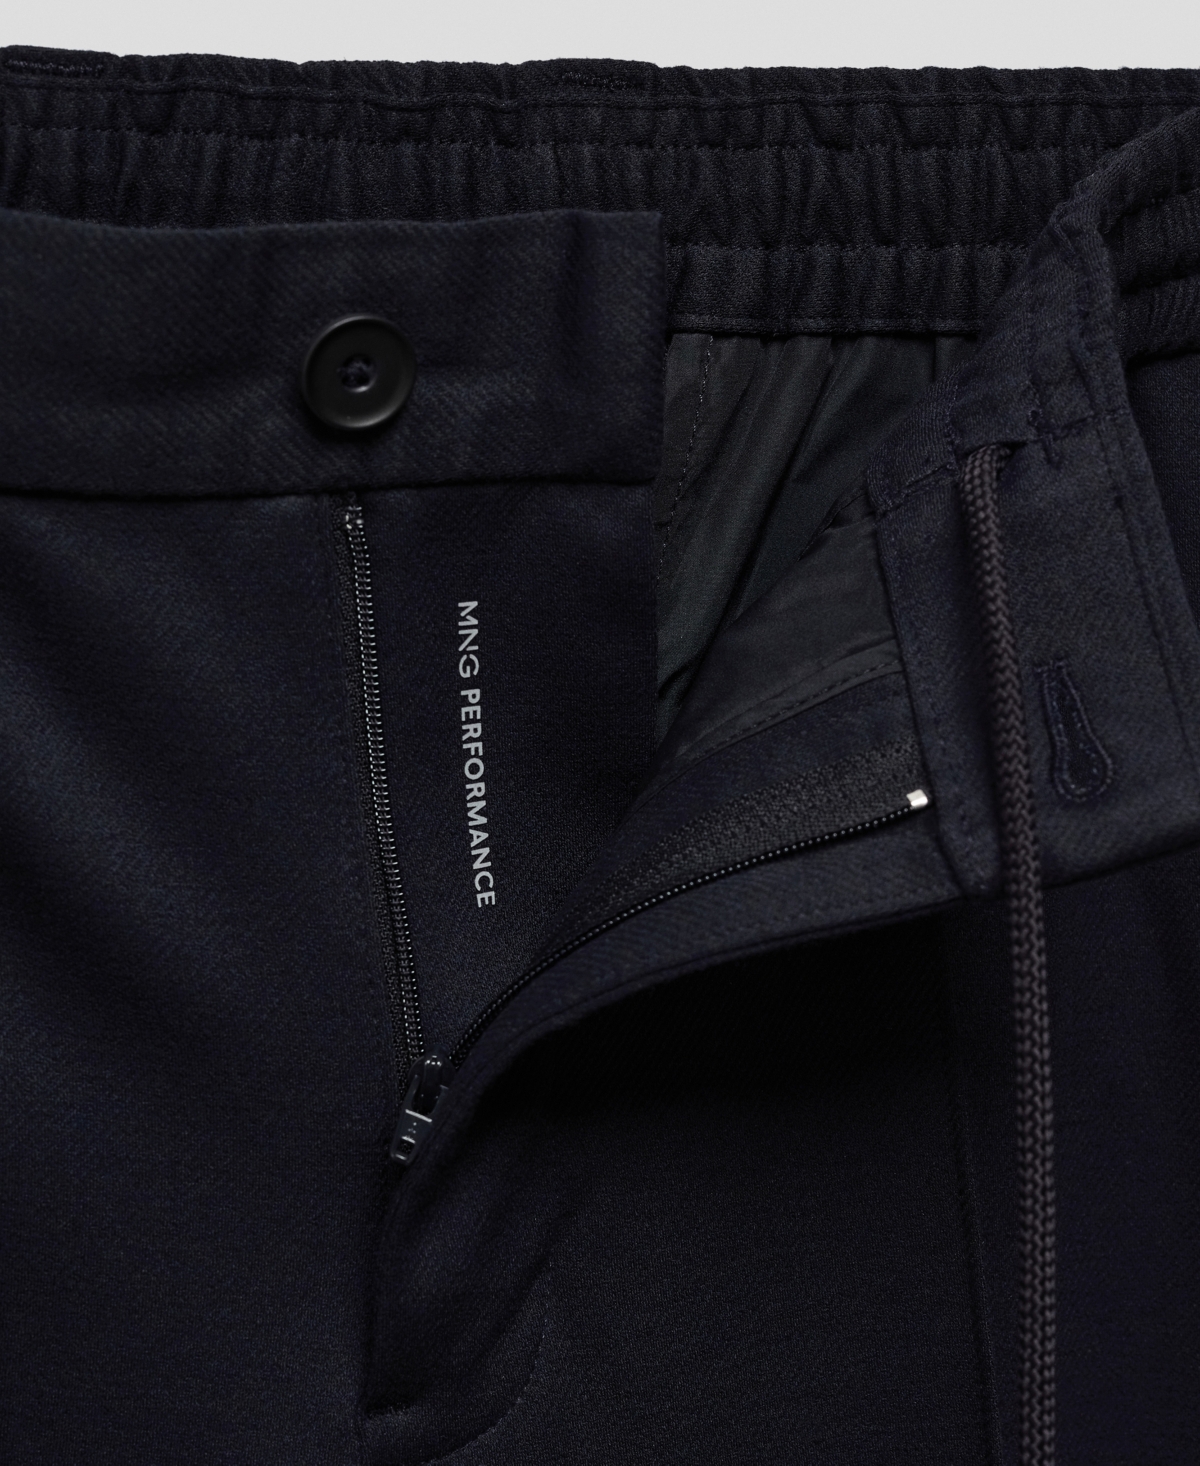 Shop Mango Men's Crease-resistant Slim-fit Pants In Khaki